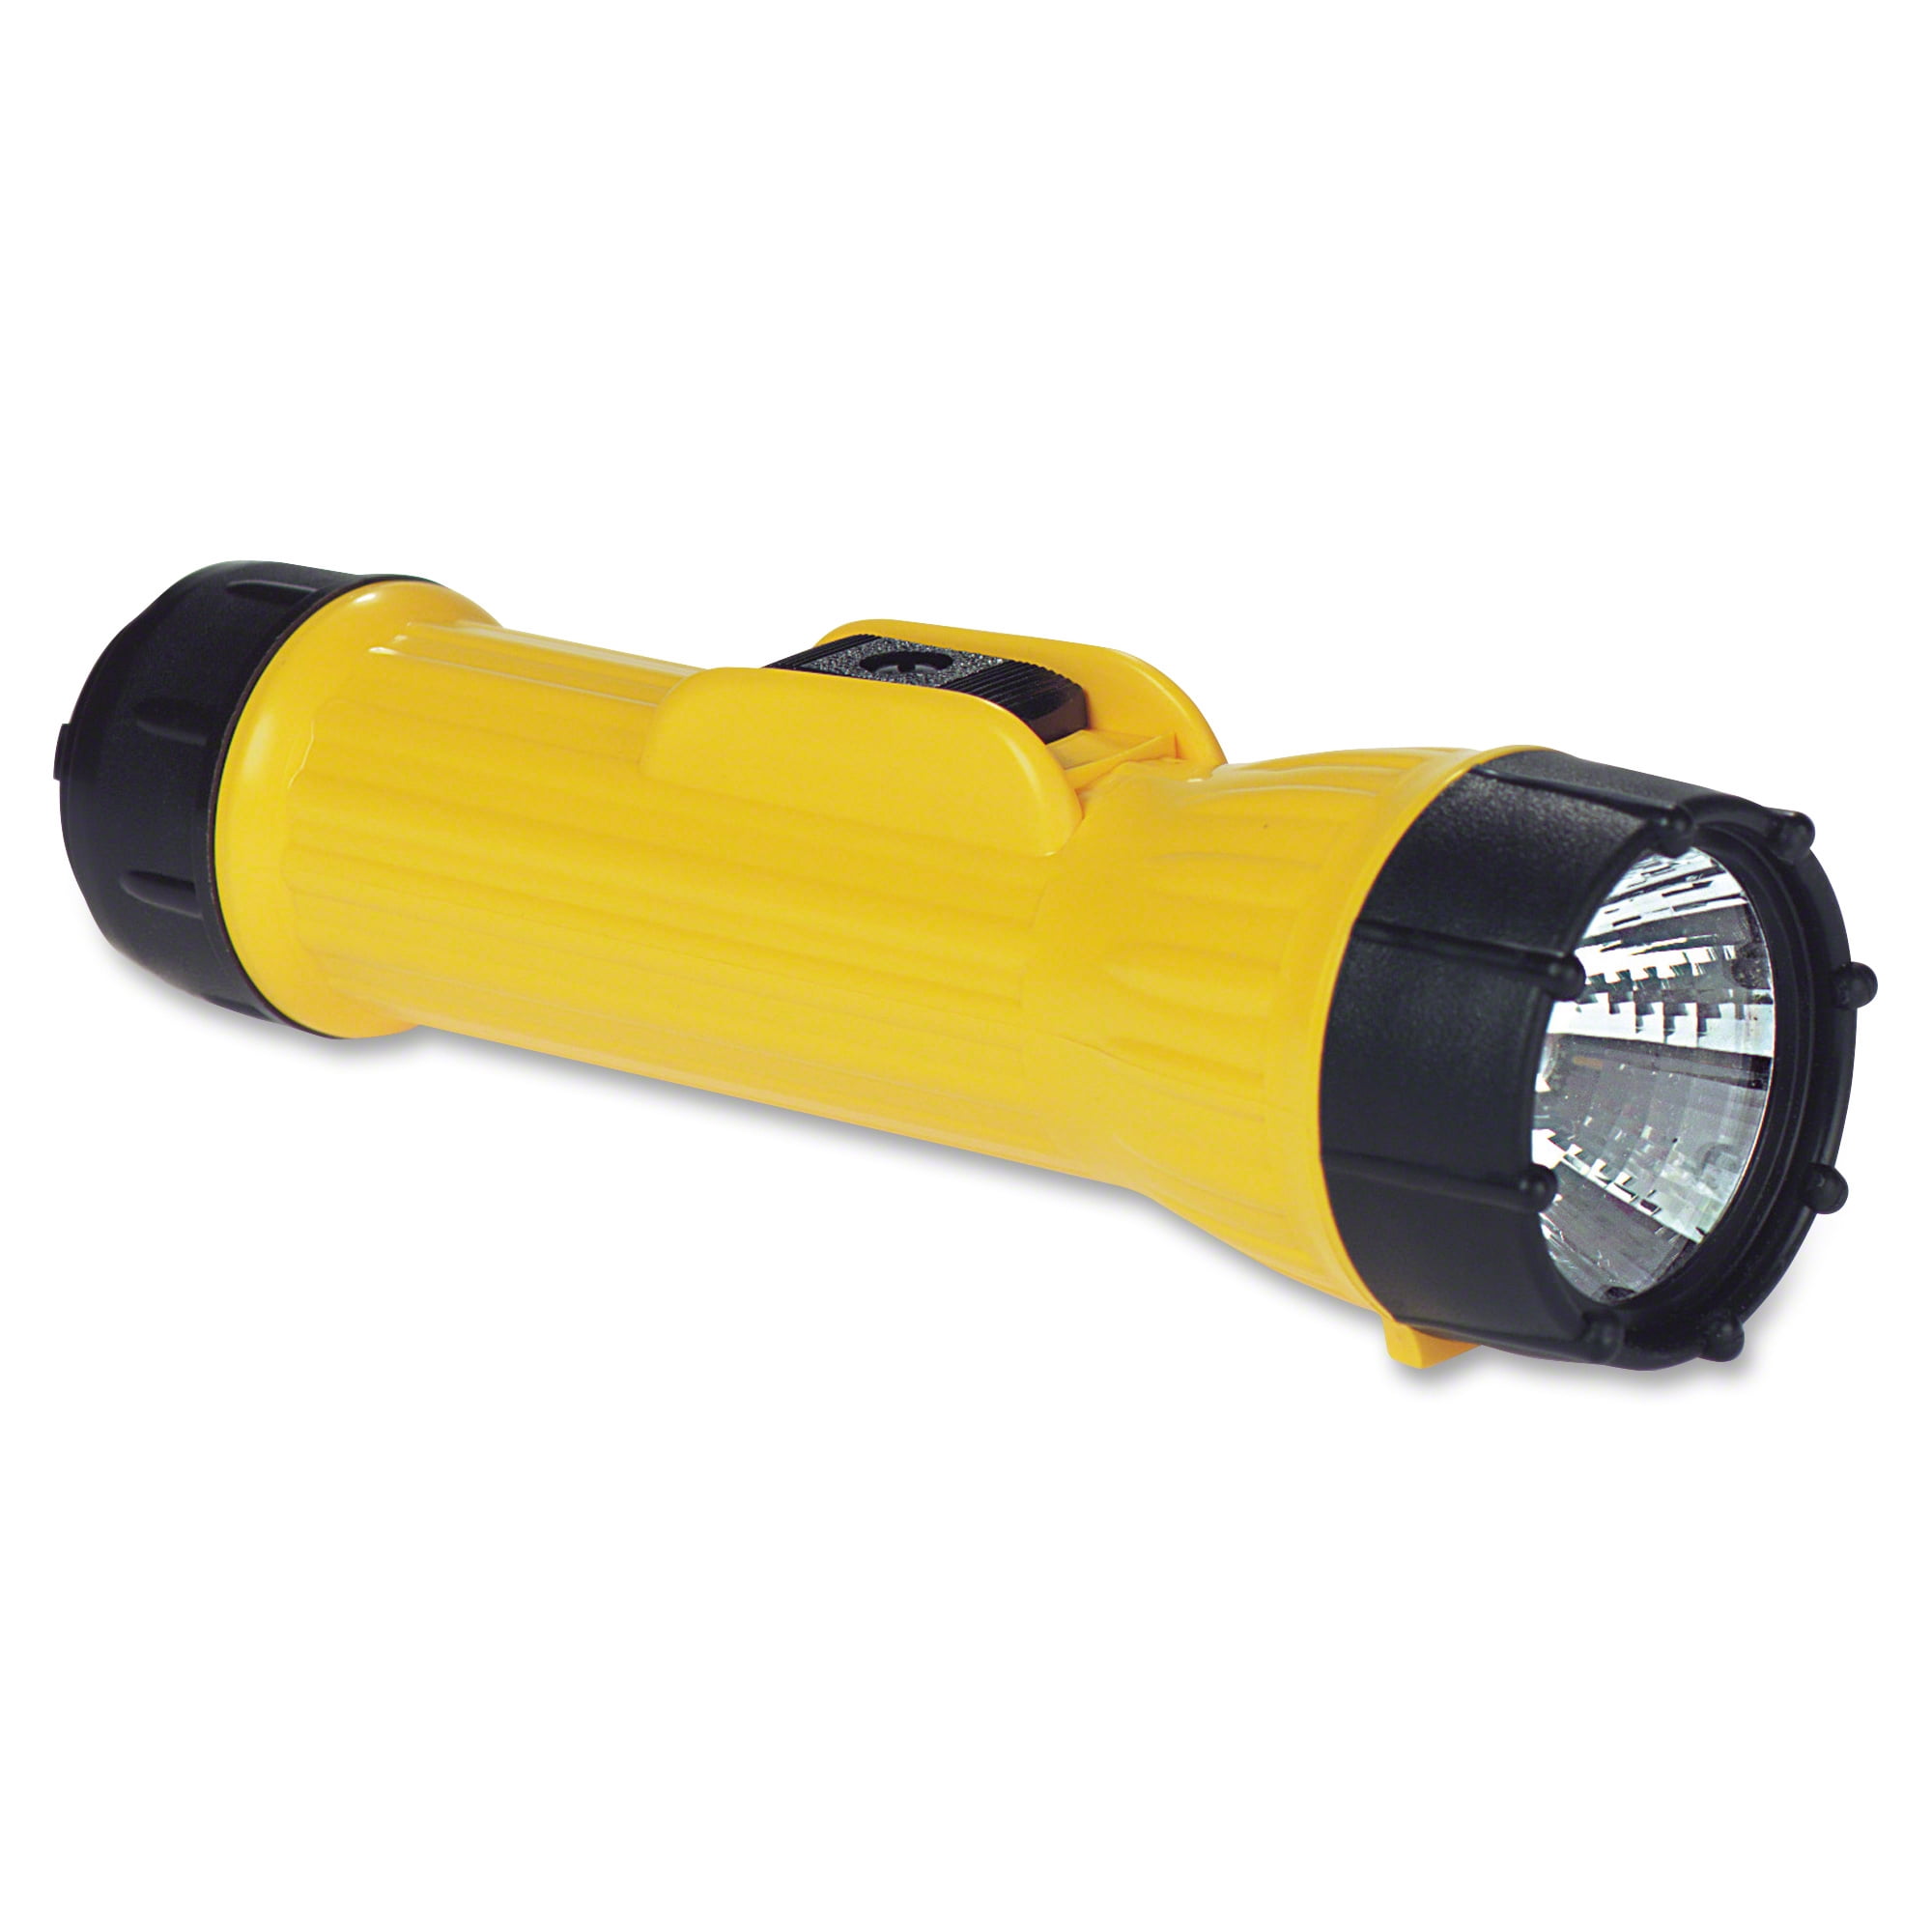 Sold Separately Bright Star Industrial Heavy-Duty Flashlight 2D Yellow/Black 